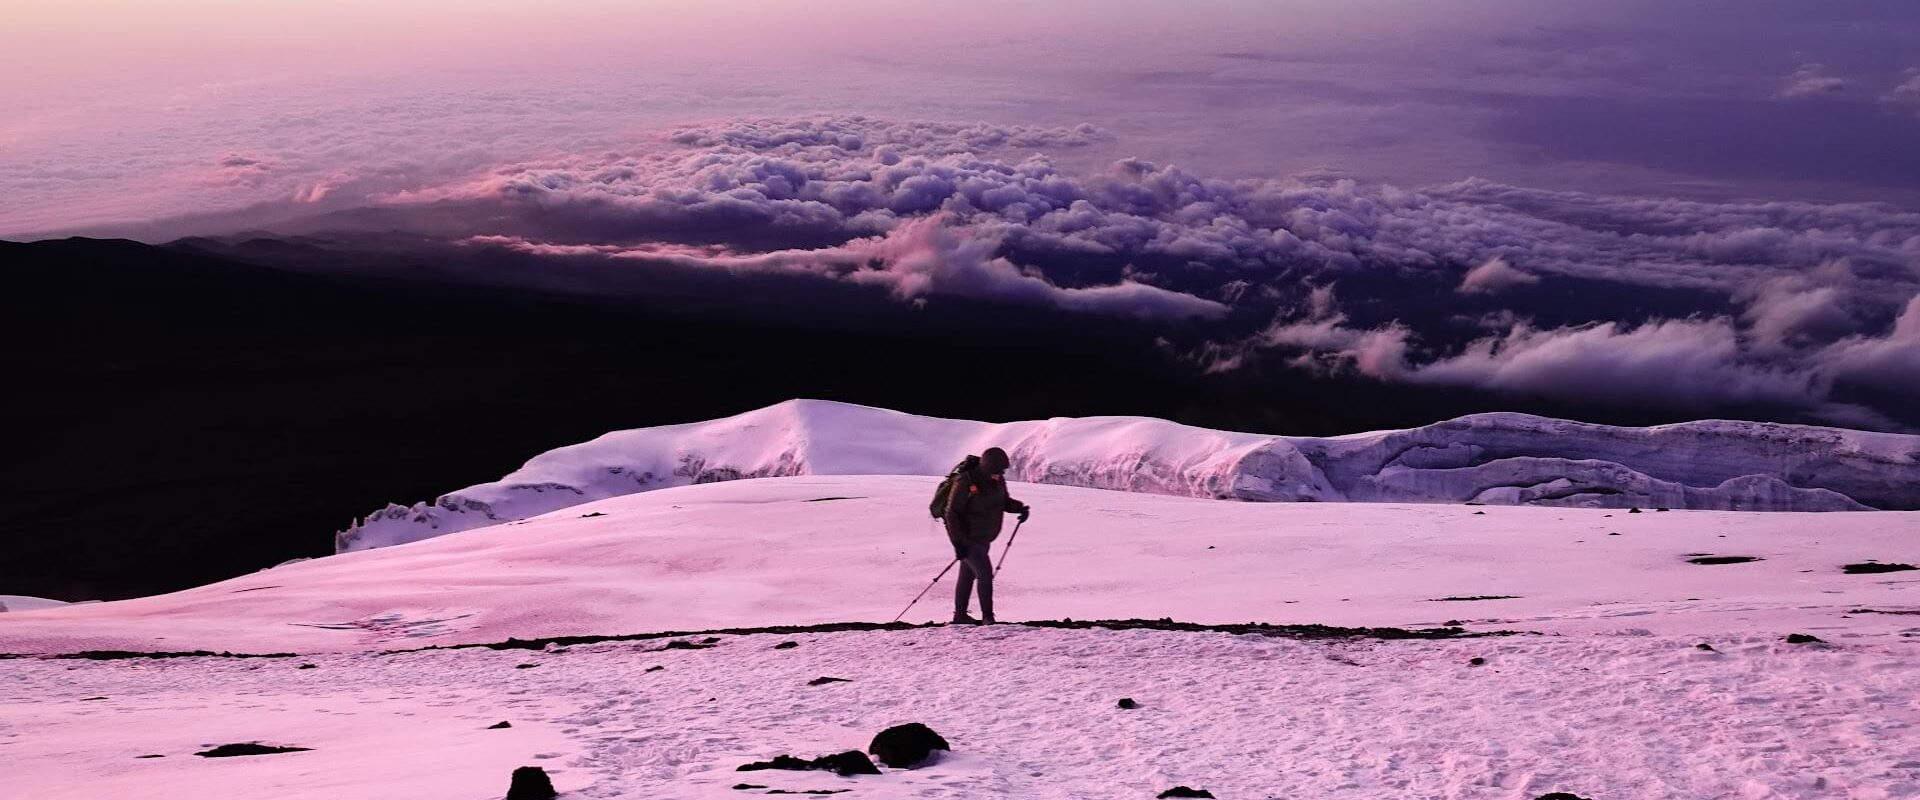 Soundtrack to Kilimanjaro